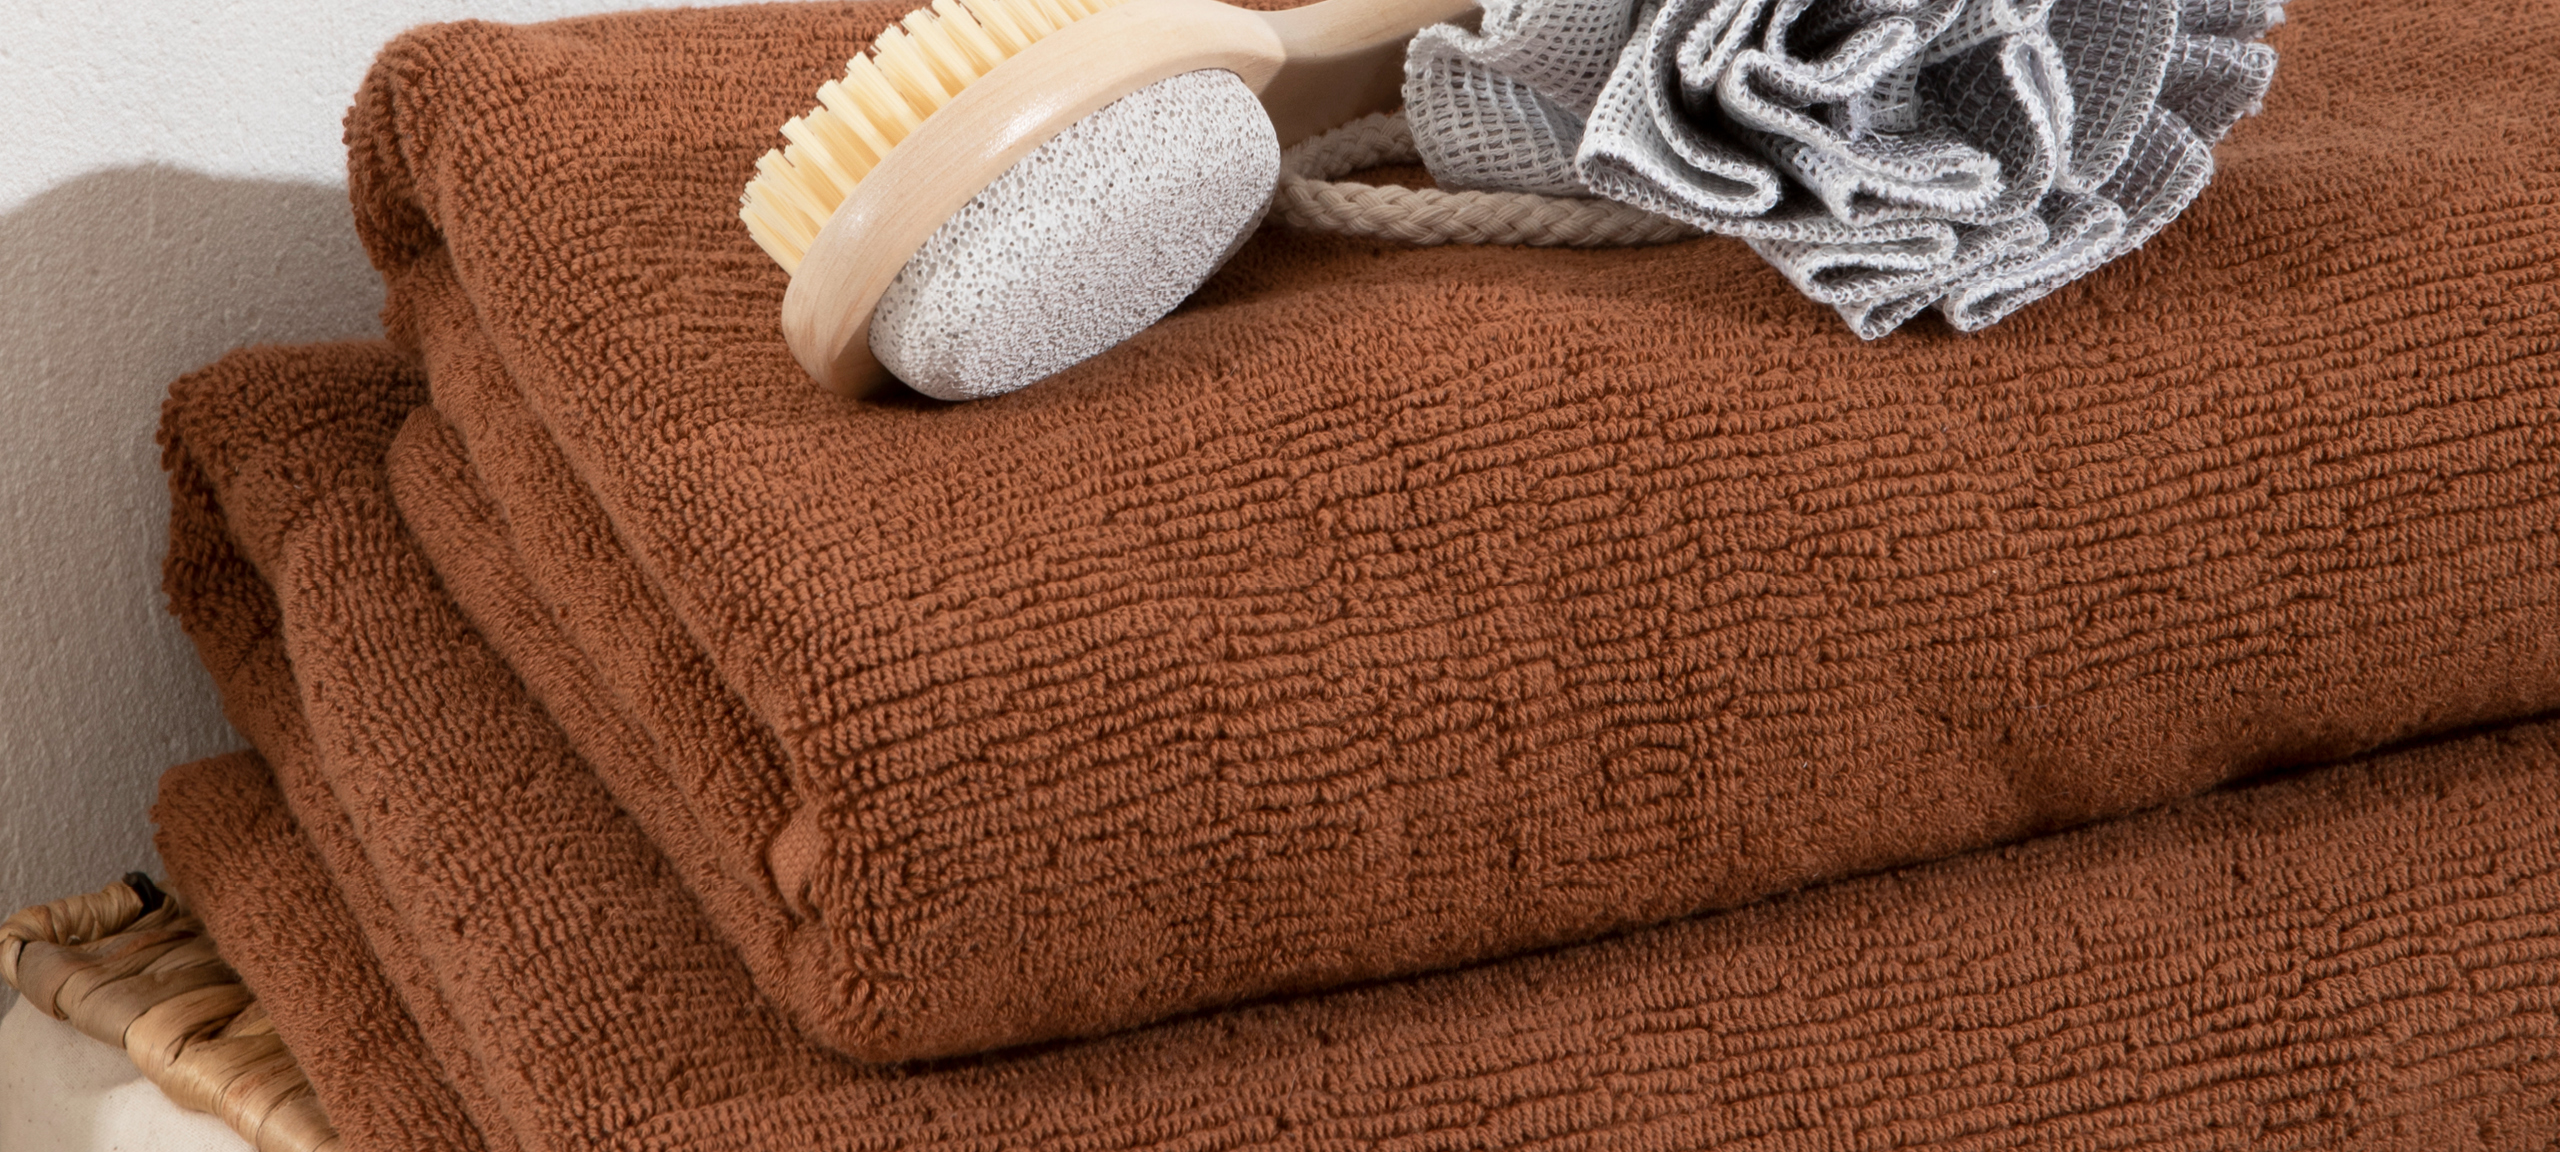 Chocolate bath towels | Pillow Talk 